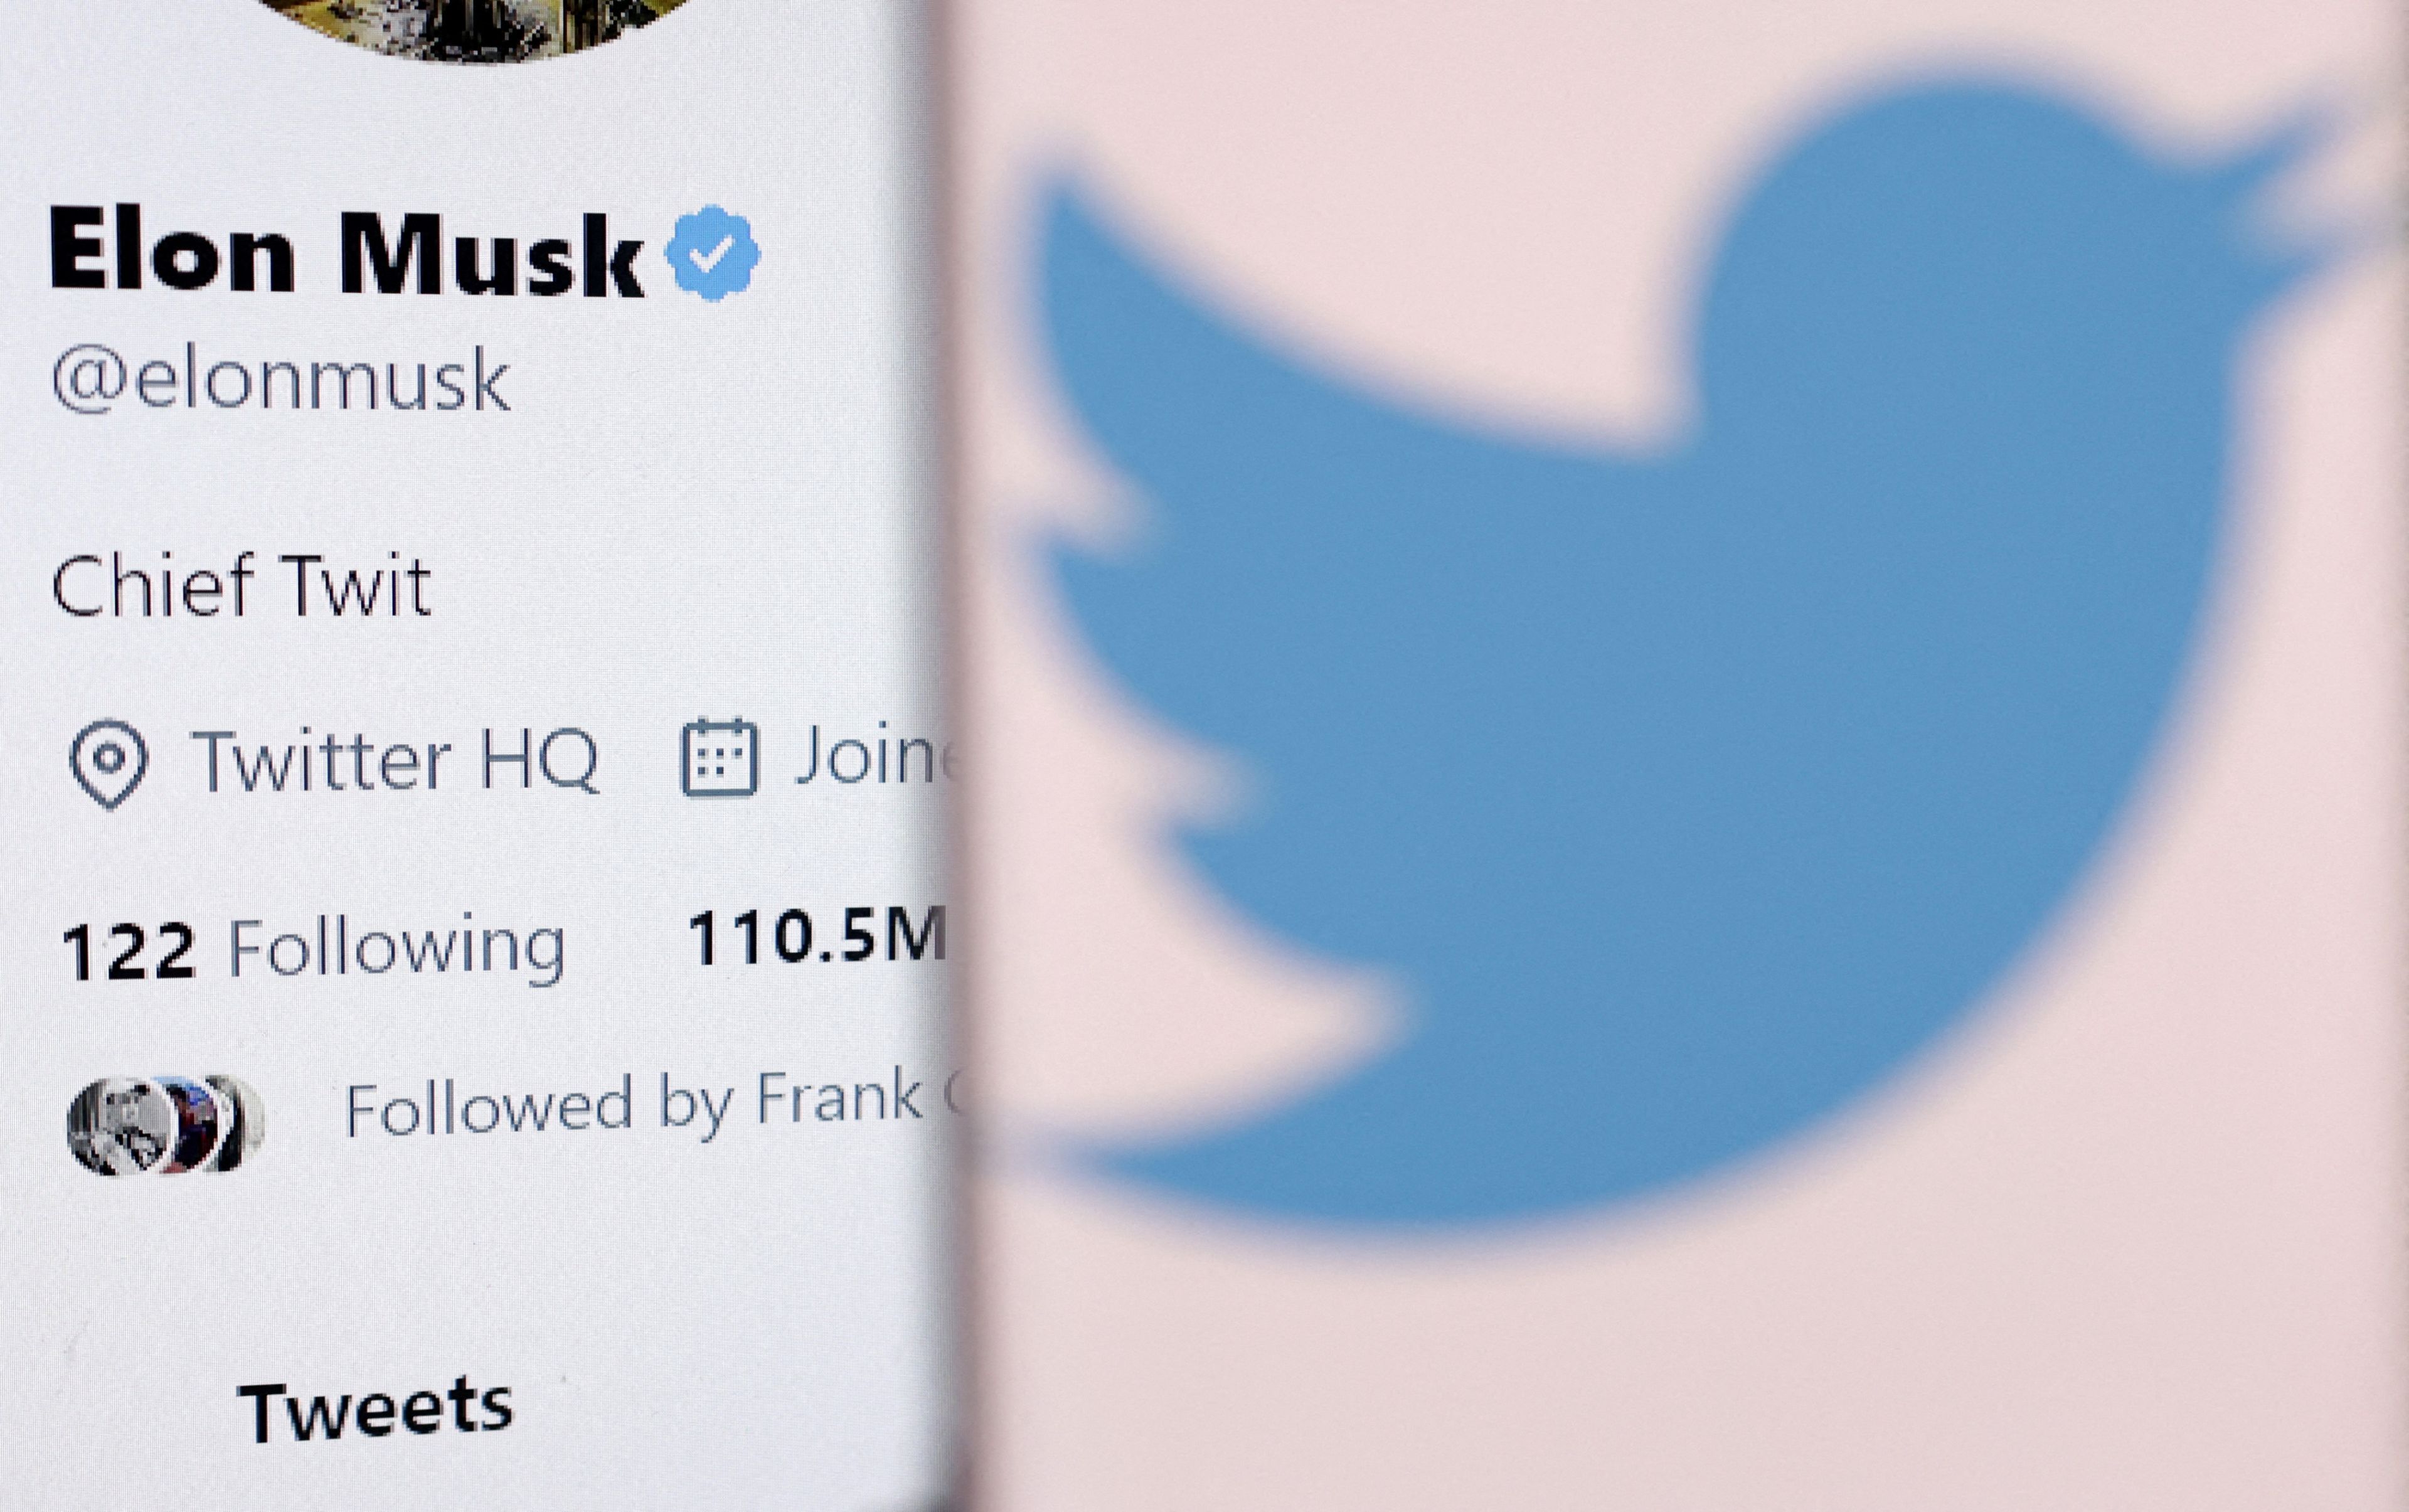 Twitter And Elon Musk'S Account